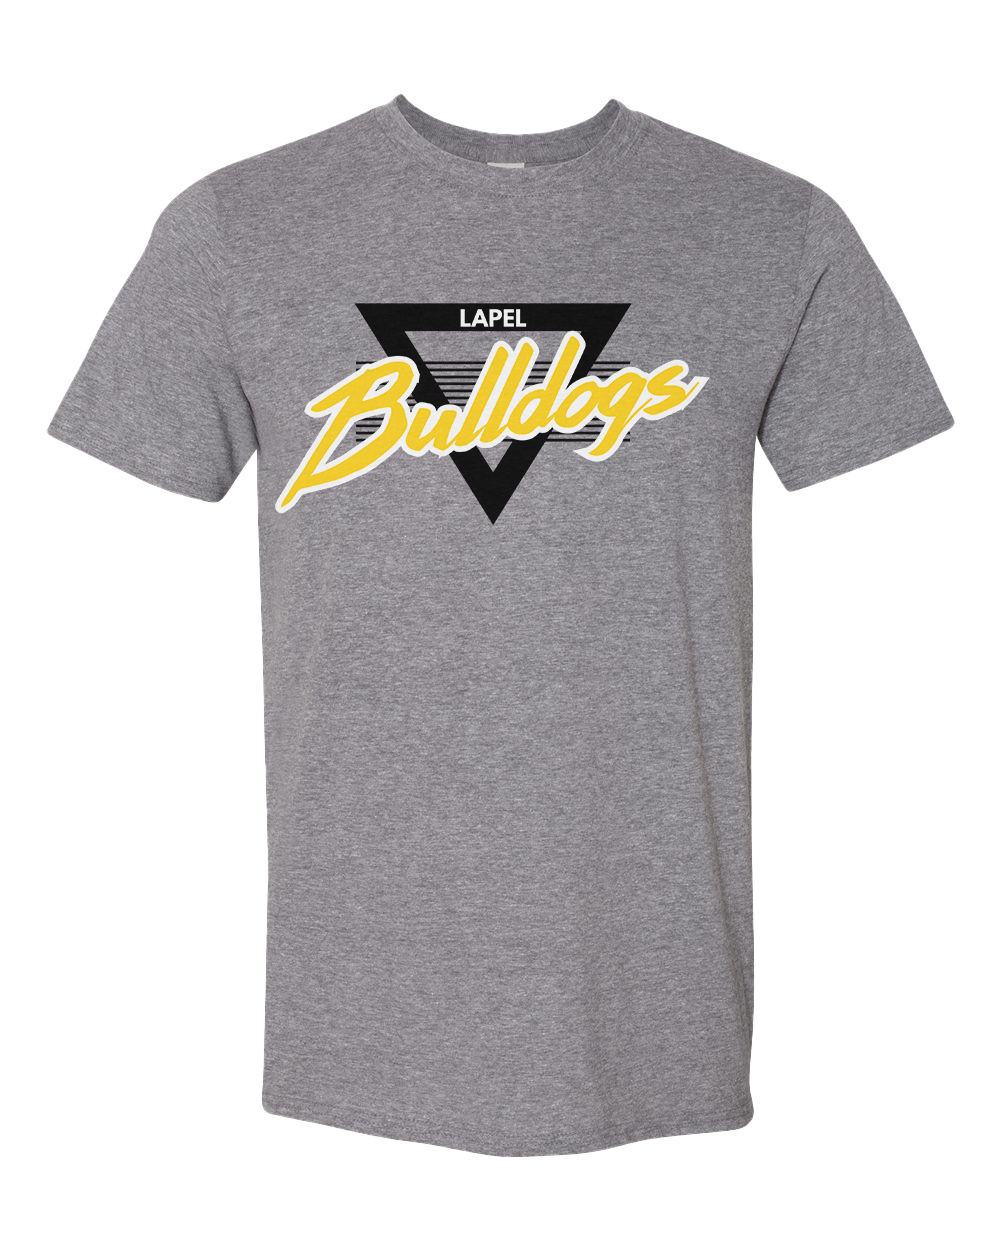 Lapel Bulldogs Retro 90s Tshirt - Graphite Heather